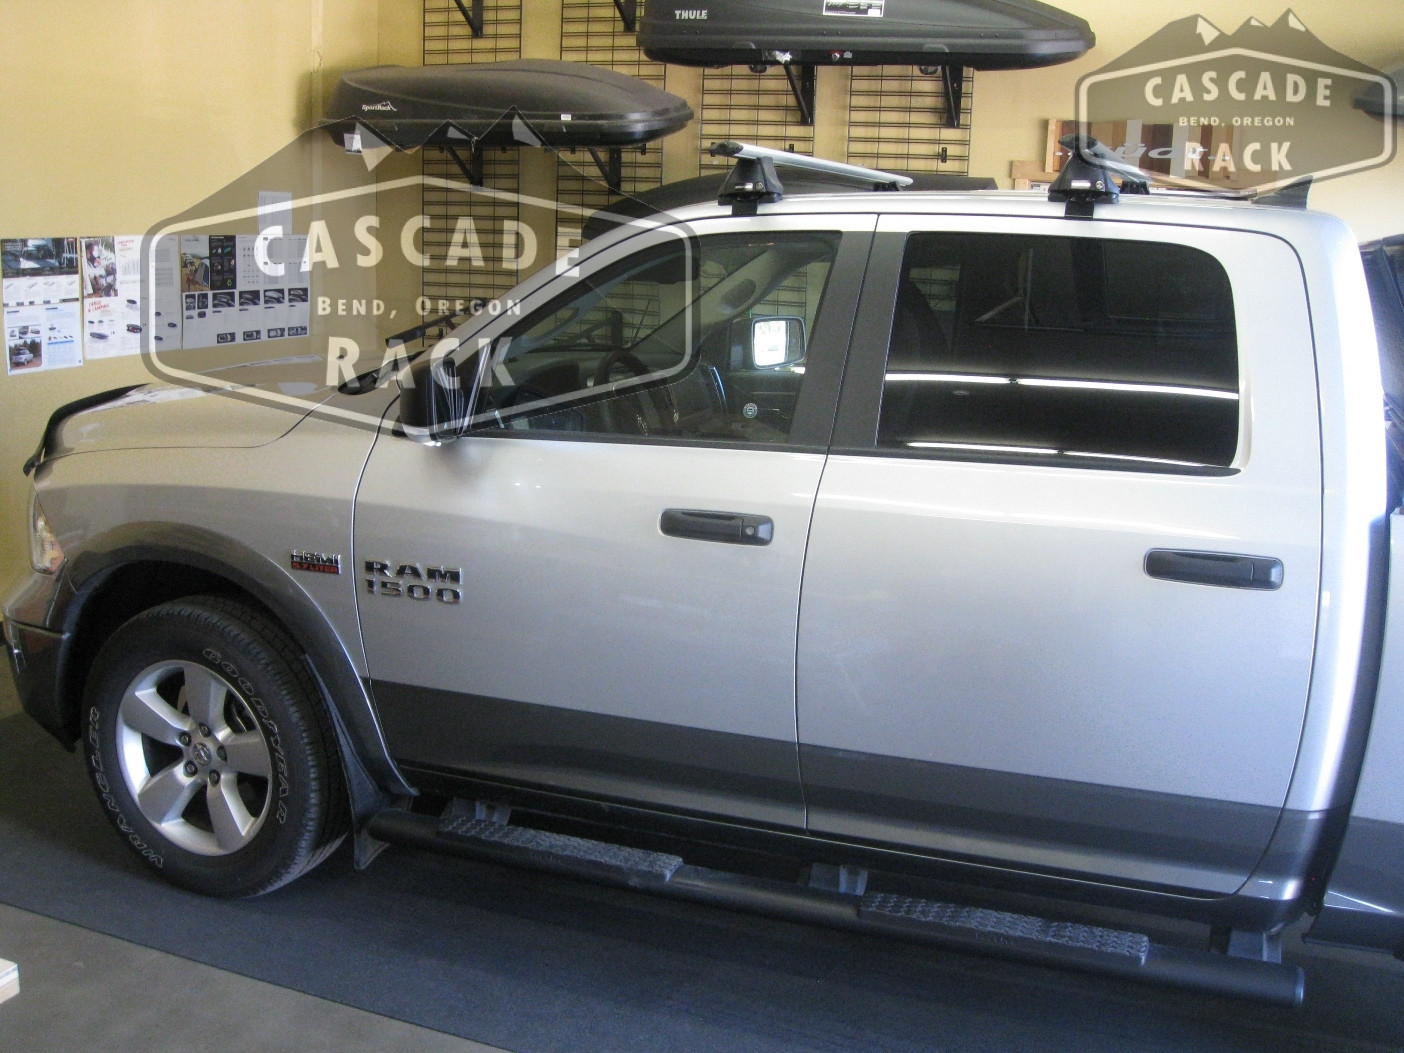 2013 Dodge Ram 1500 Crew Cab - Roof Rack Installation - Rhino Rack